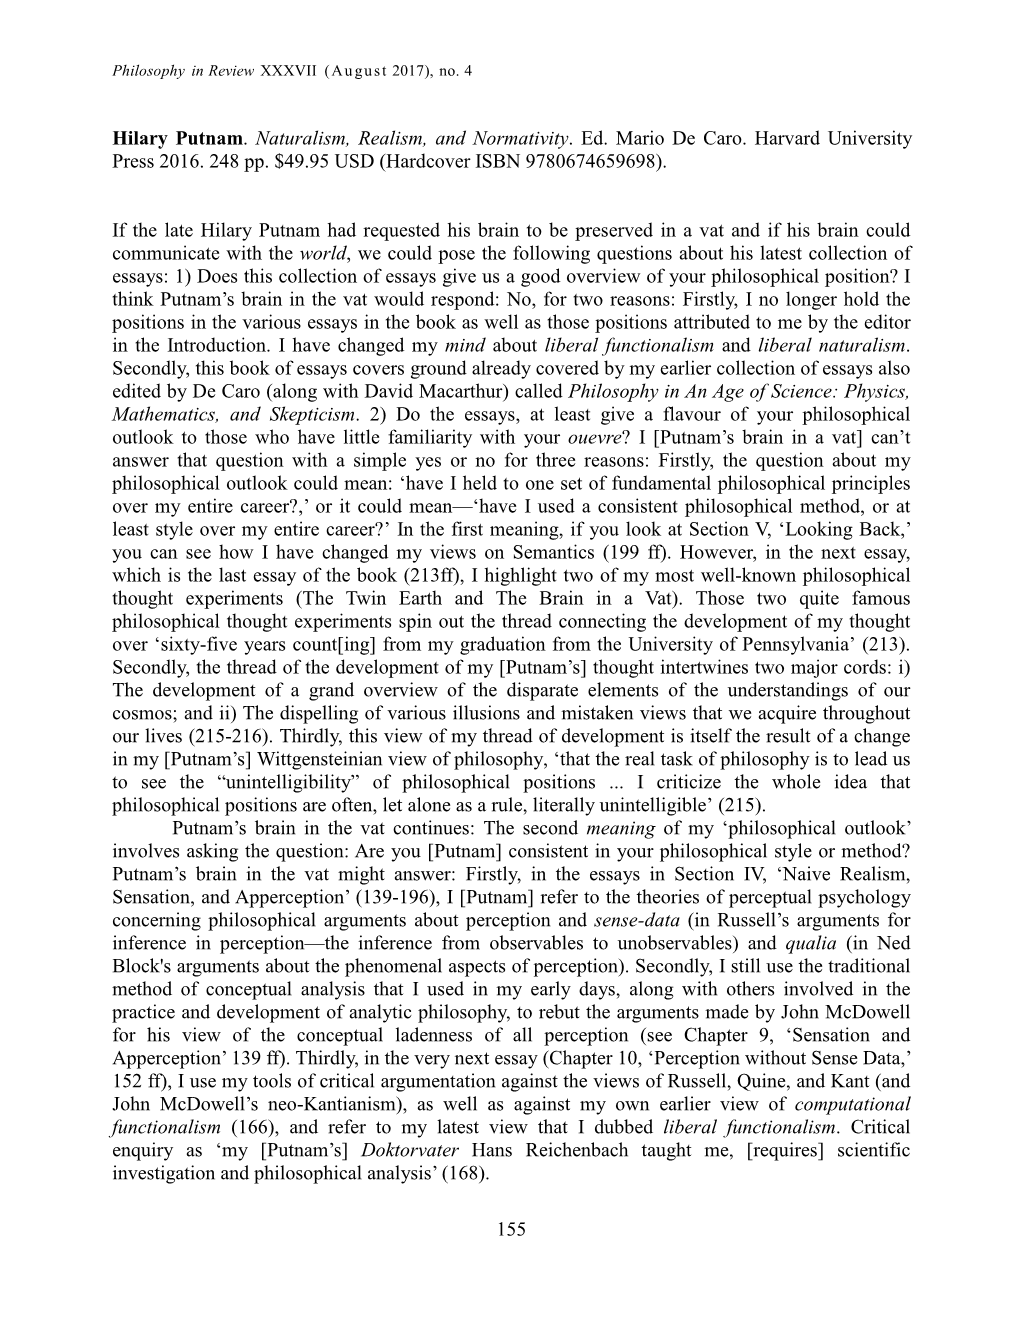 Hilary Putnam. Naturalism, Realism, and Normativity. Ed. Mario De Caro